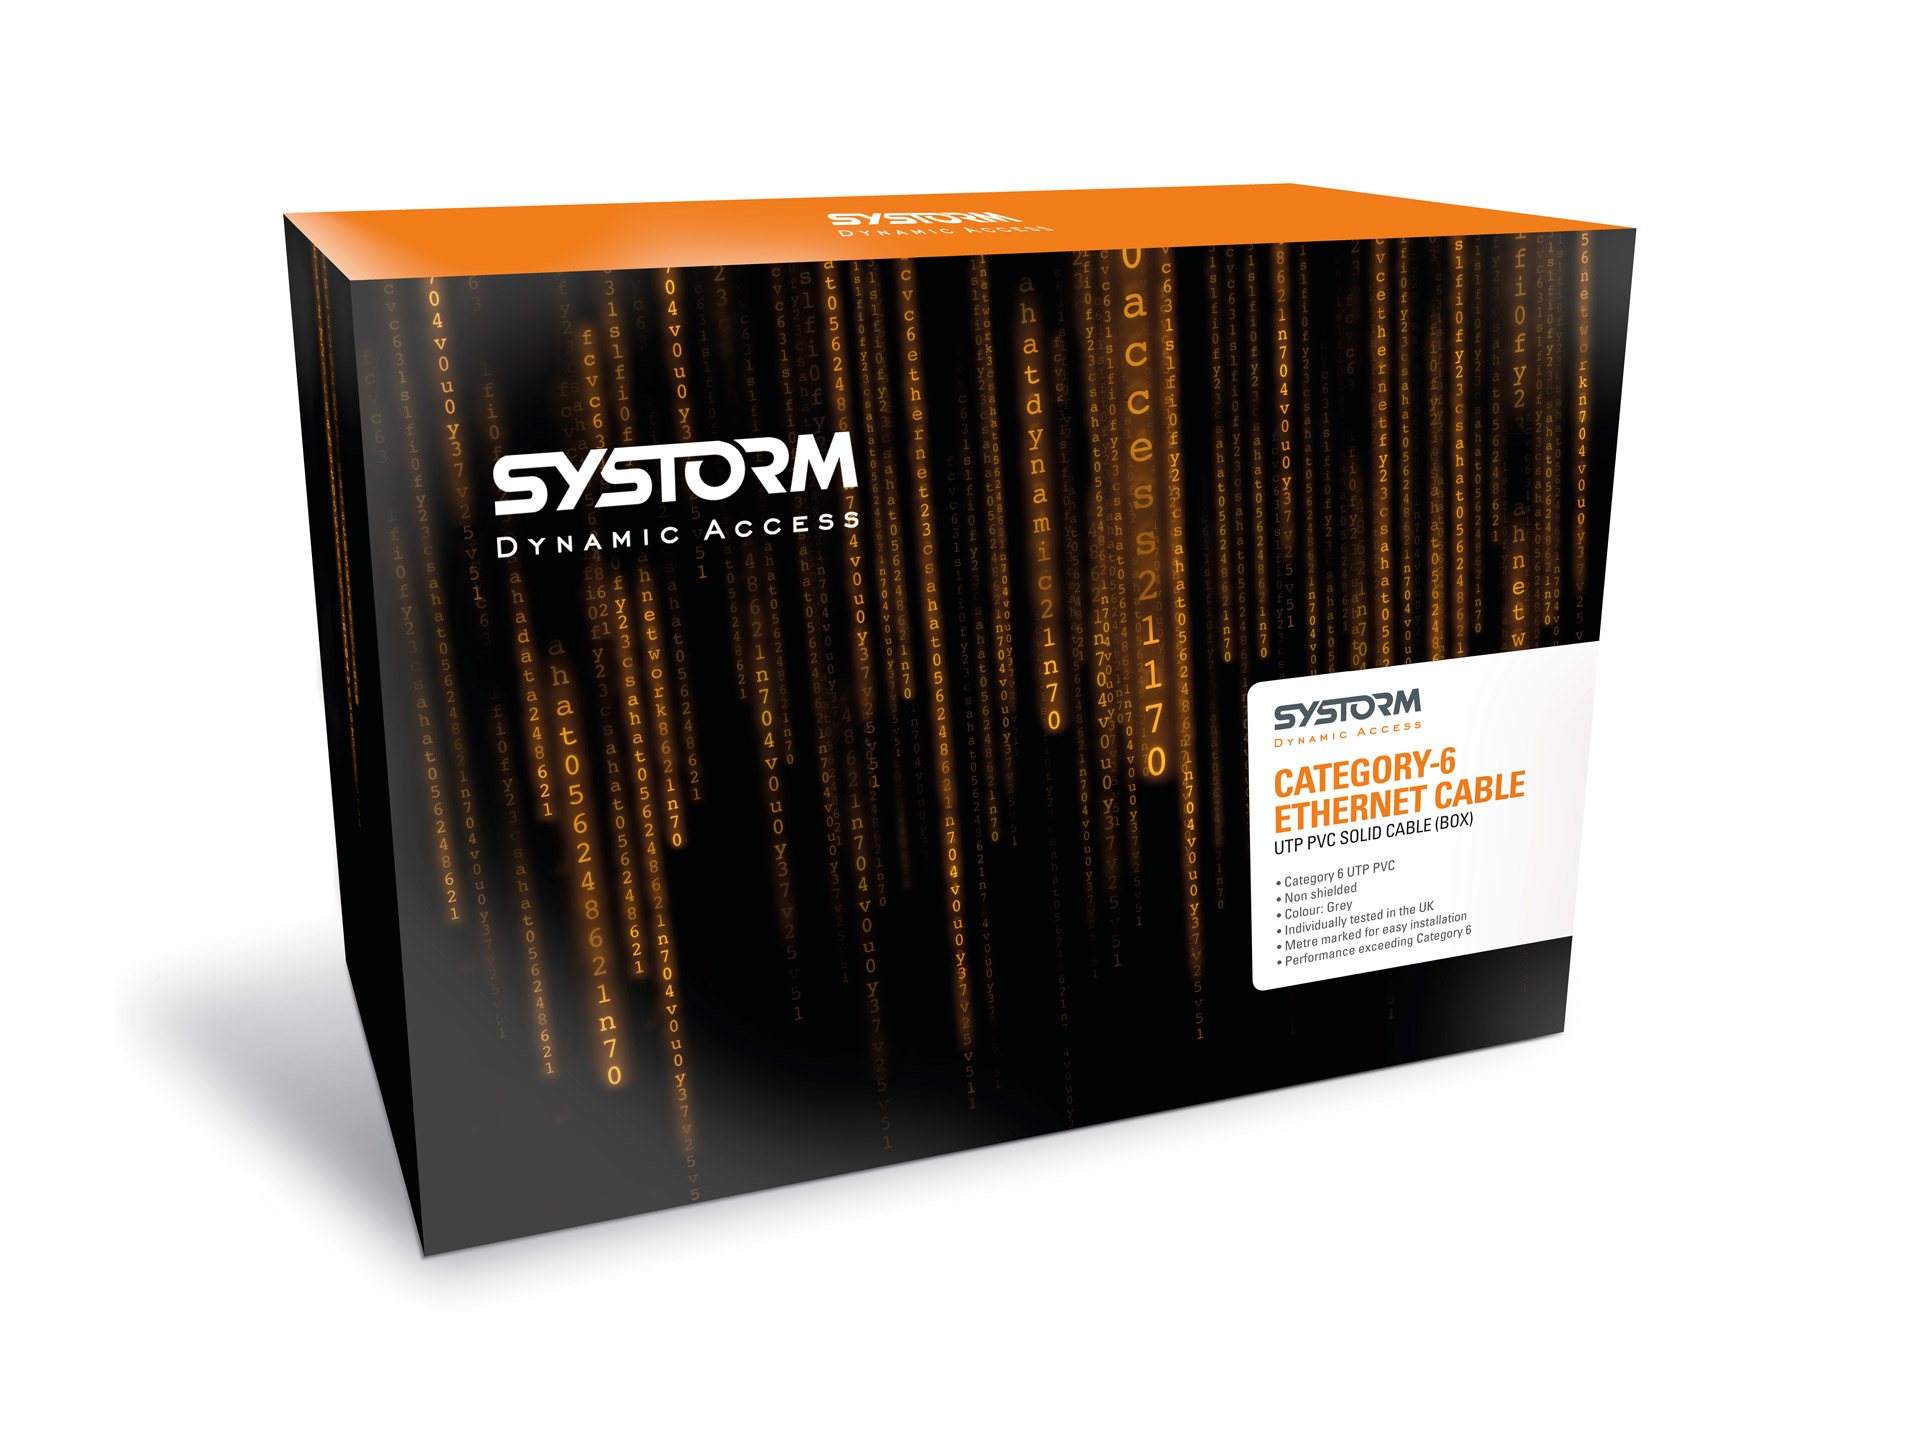 Systorm packaging render